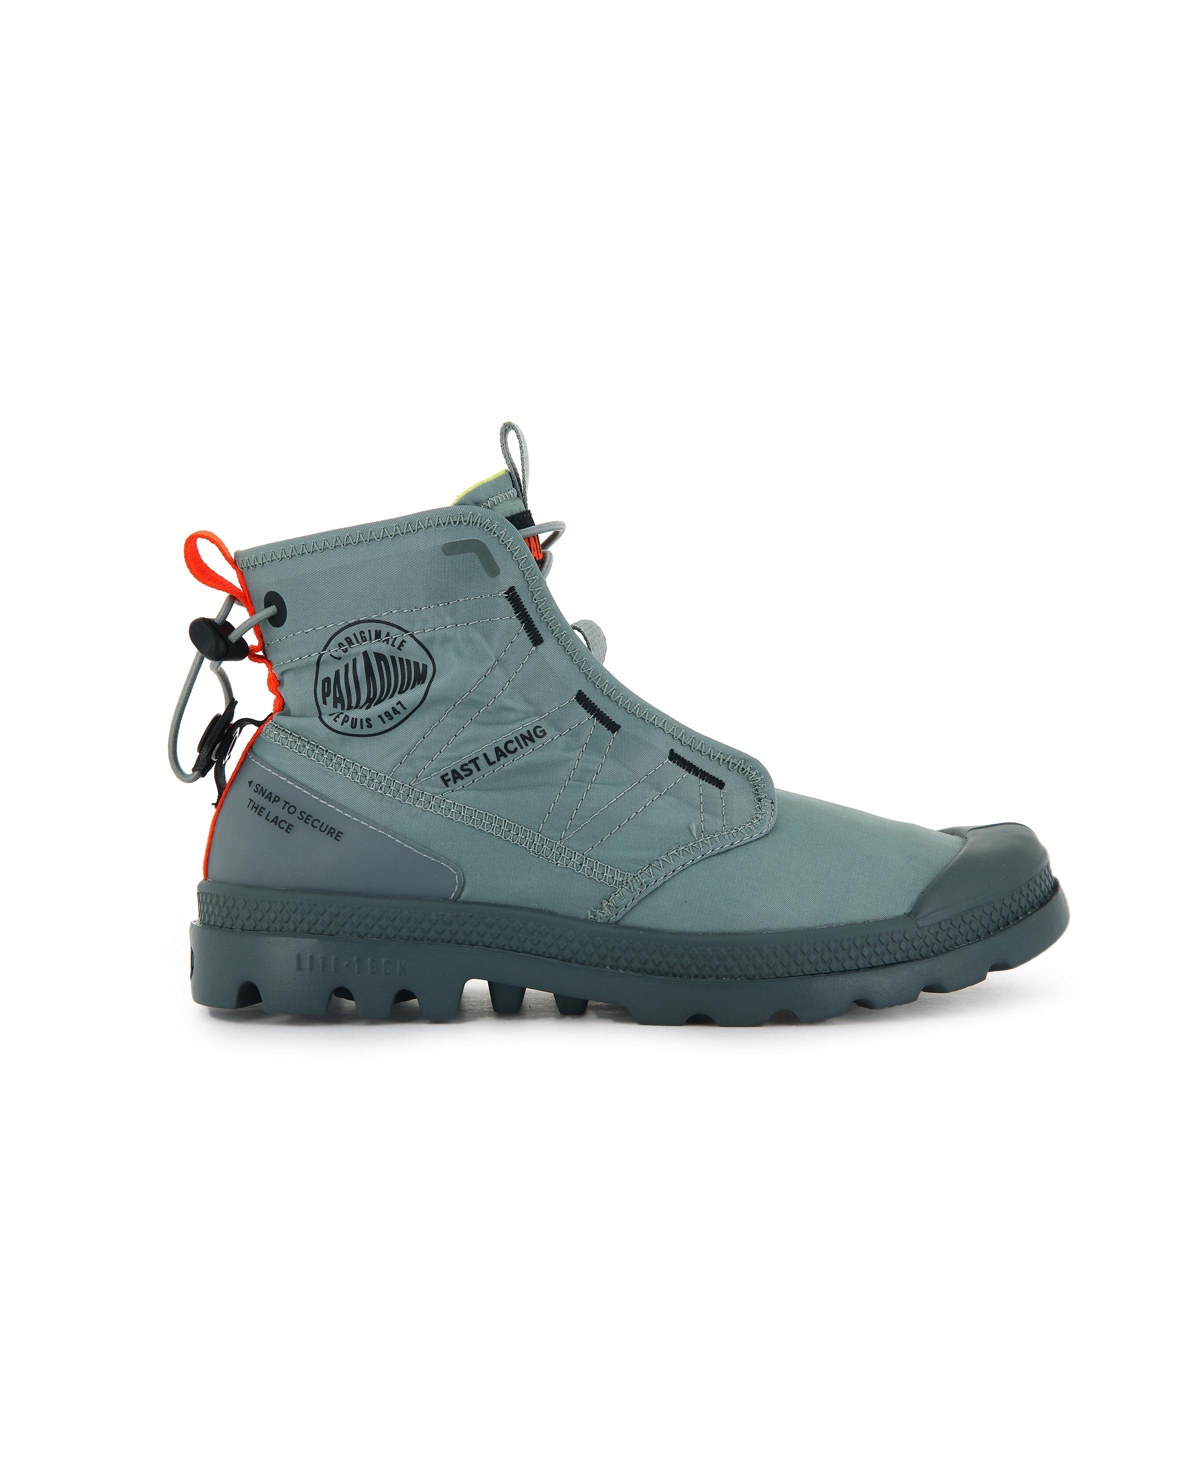 Men's Pampa Travel Lite Unisex Boots - Slate gray